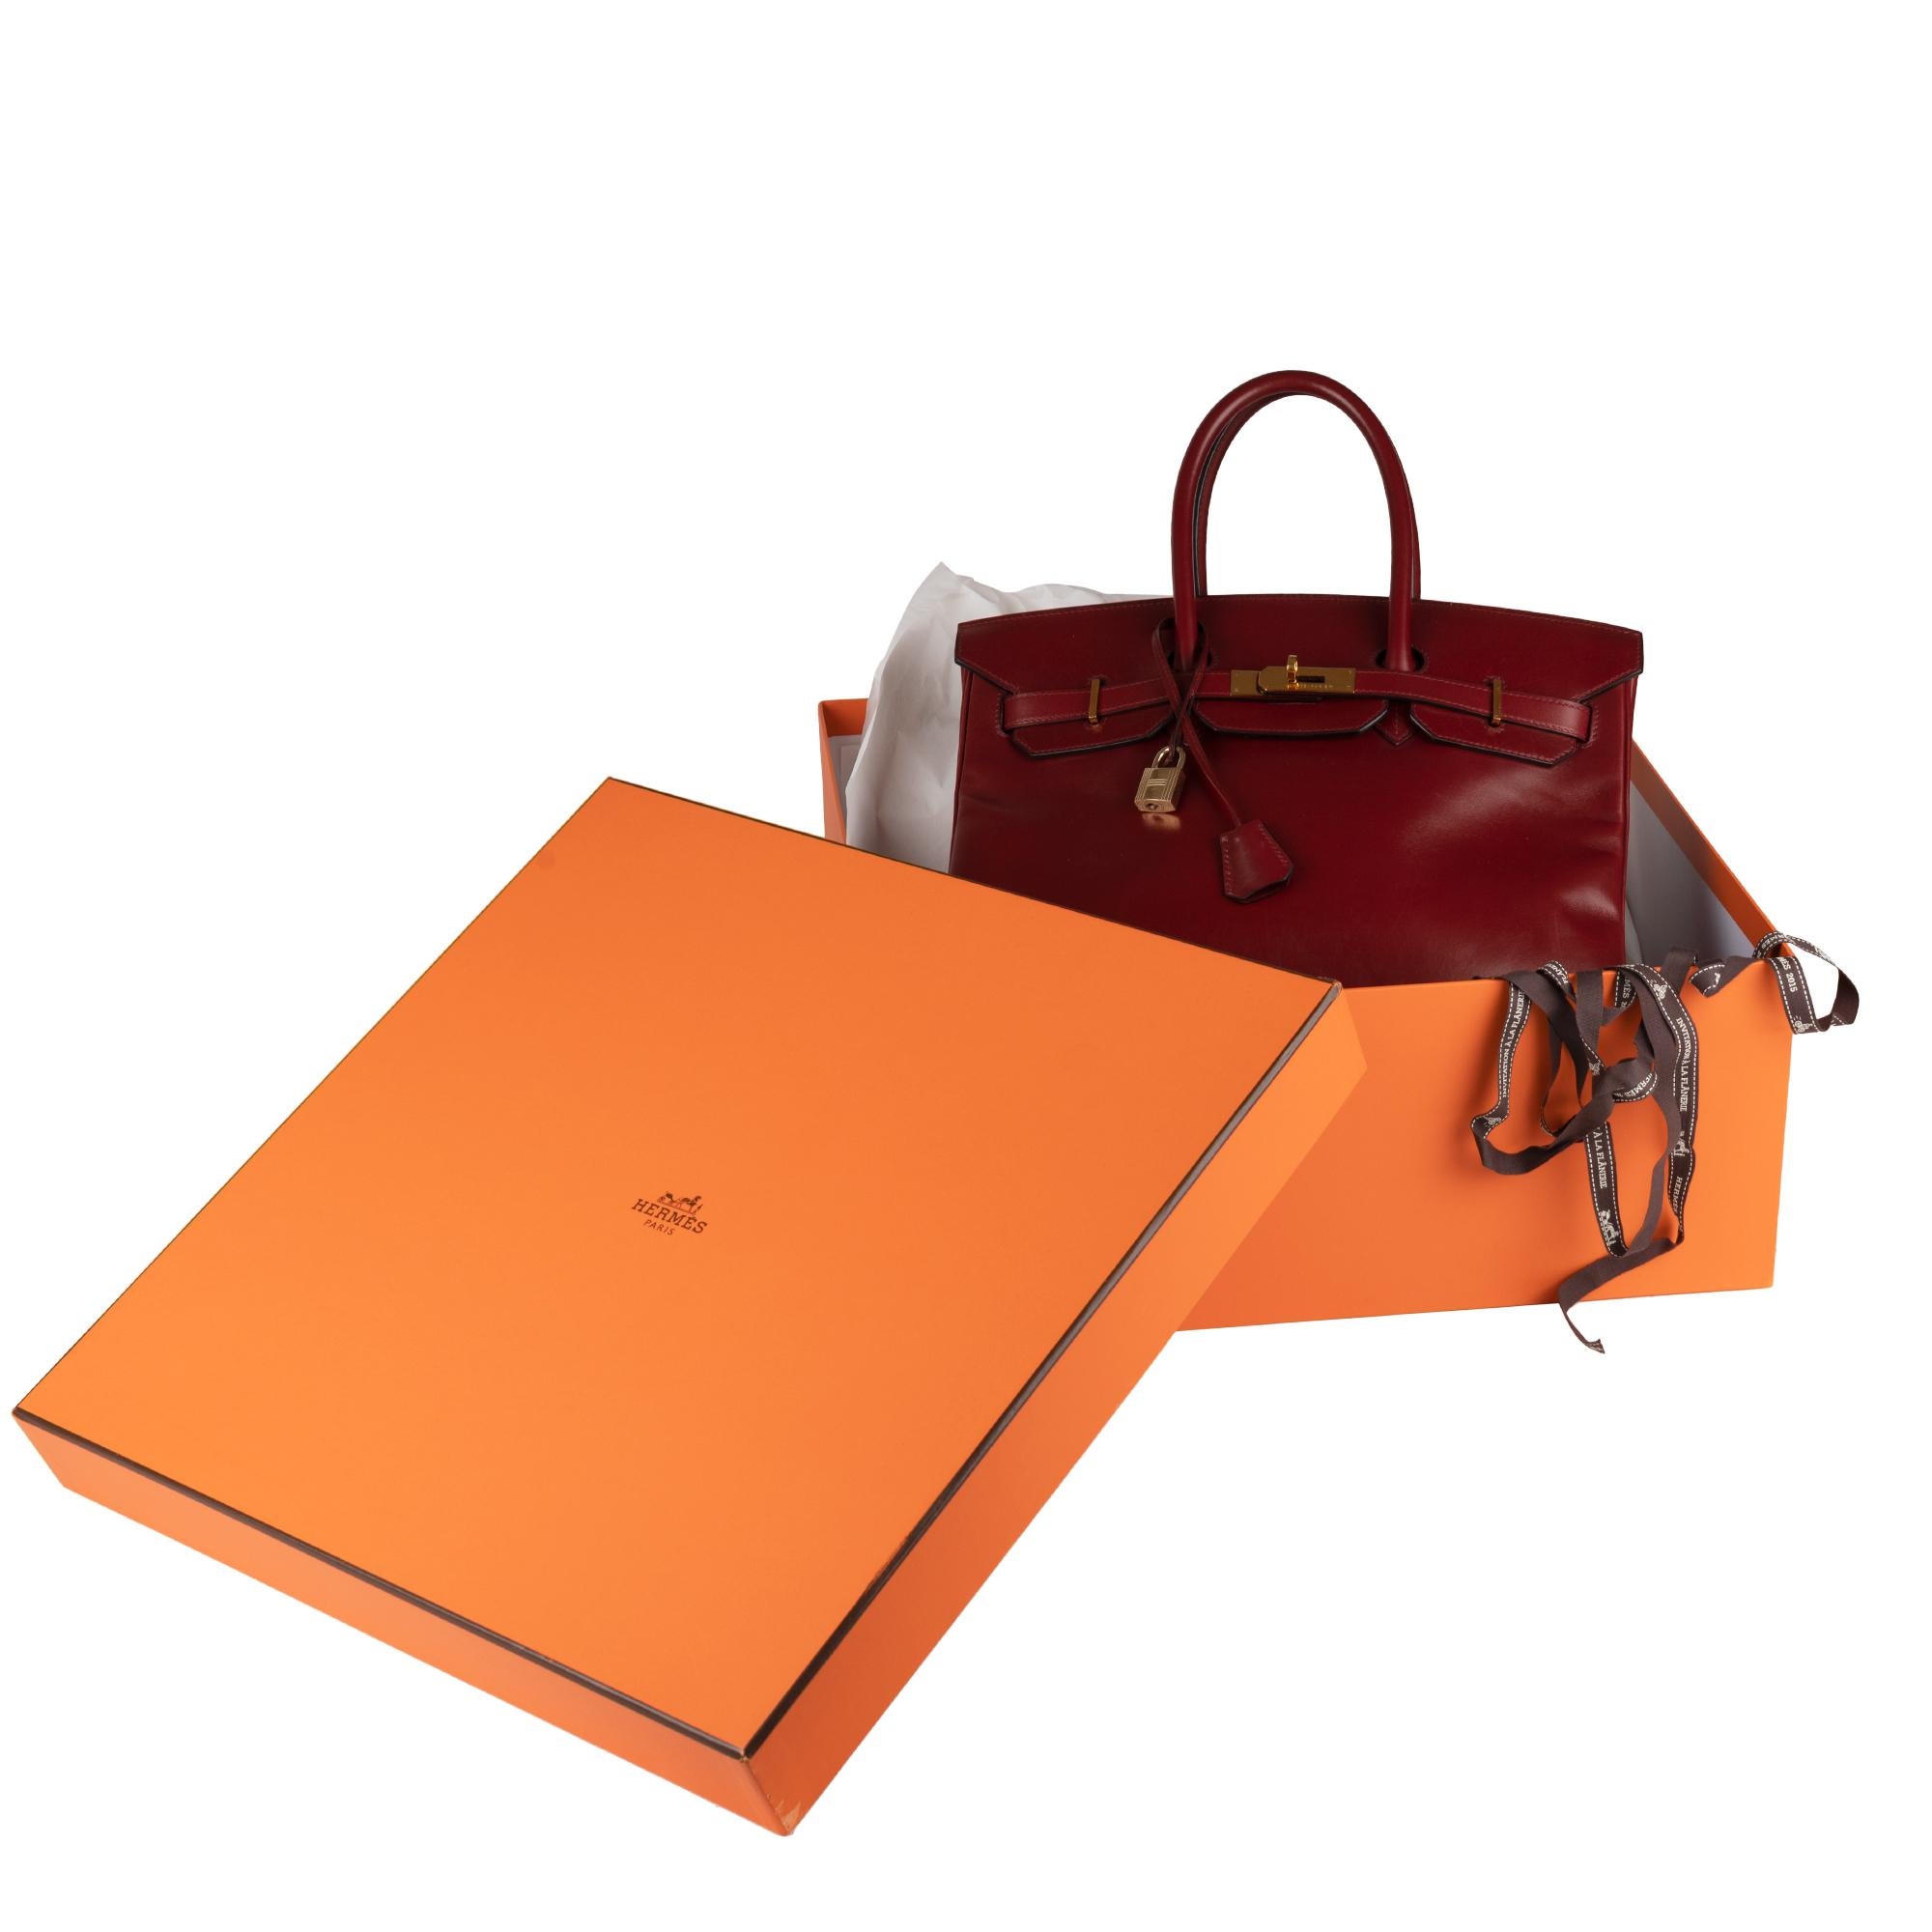 Hermes Birkin35cm Burgundy Box Leather Handbag 7